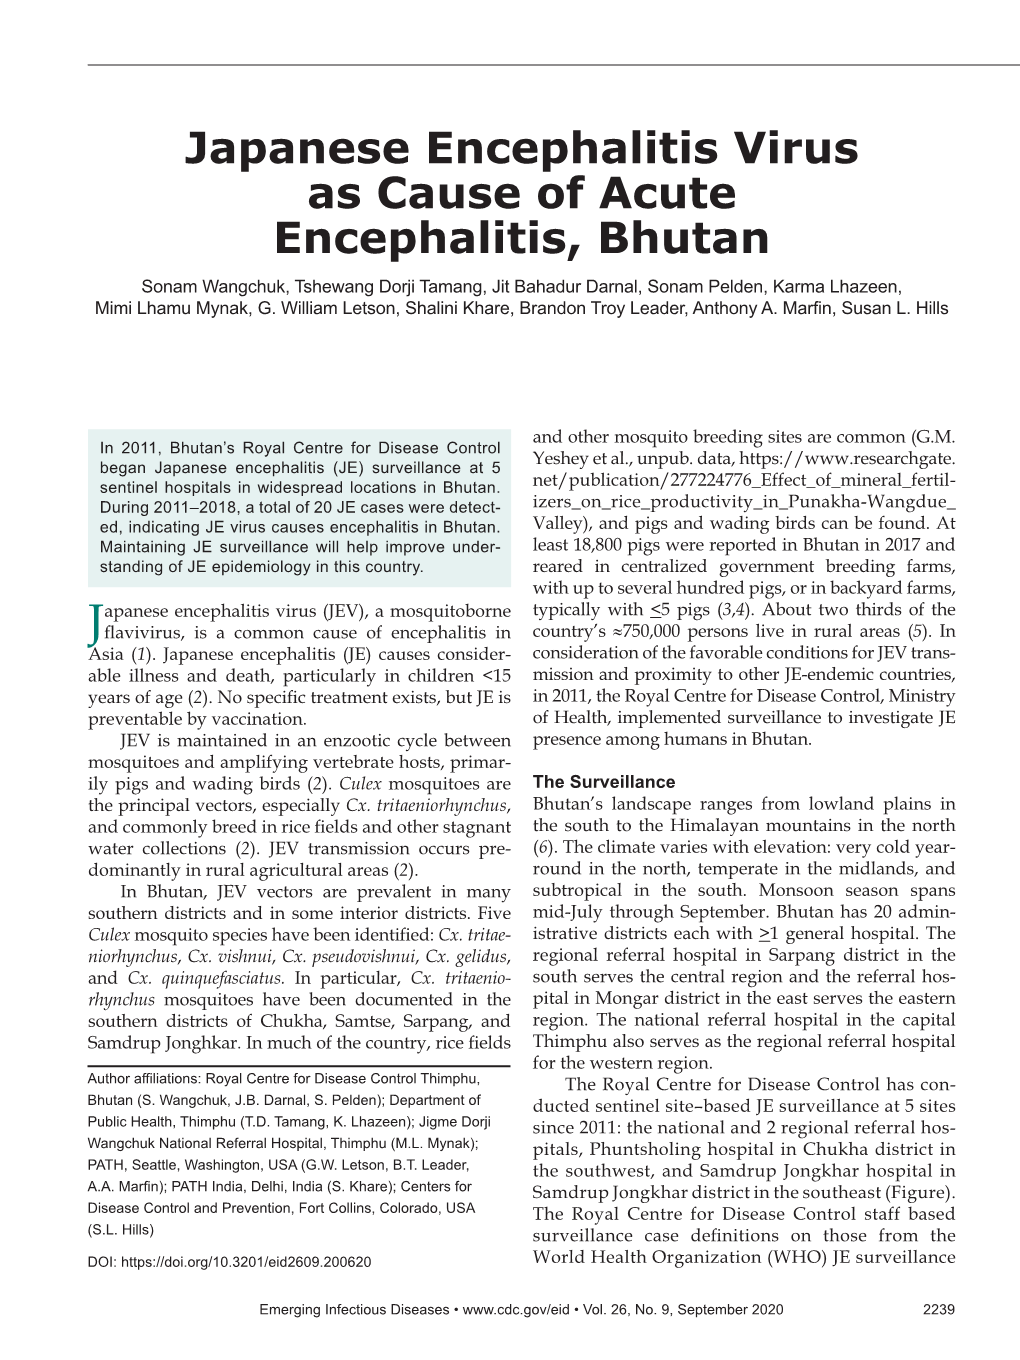 Japanese Encephalitis Virus As Cause of Acute Encephalitis, Bhutan